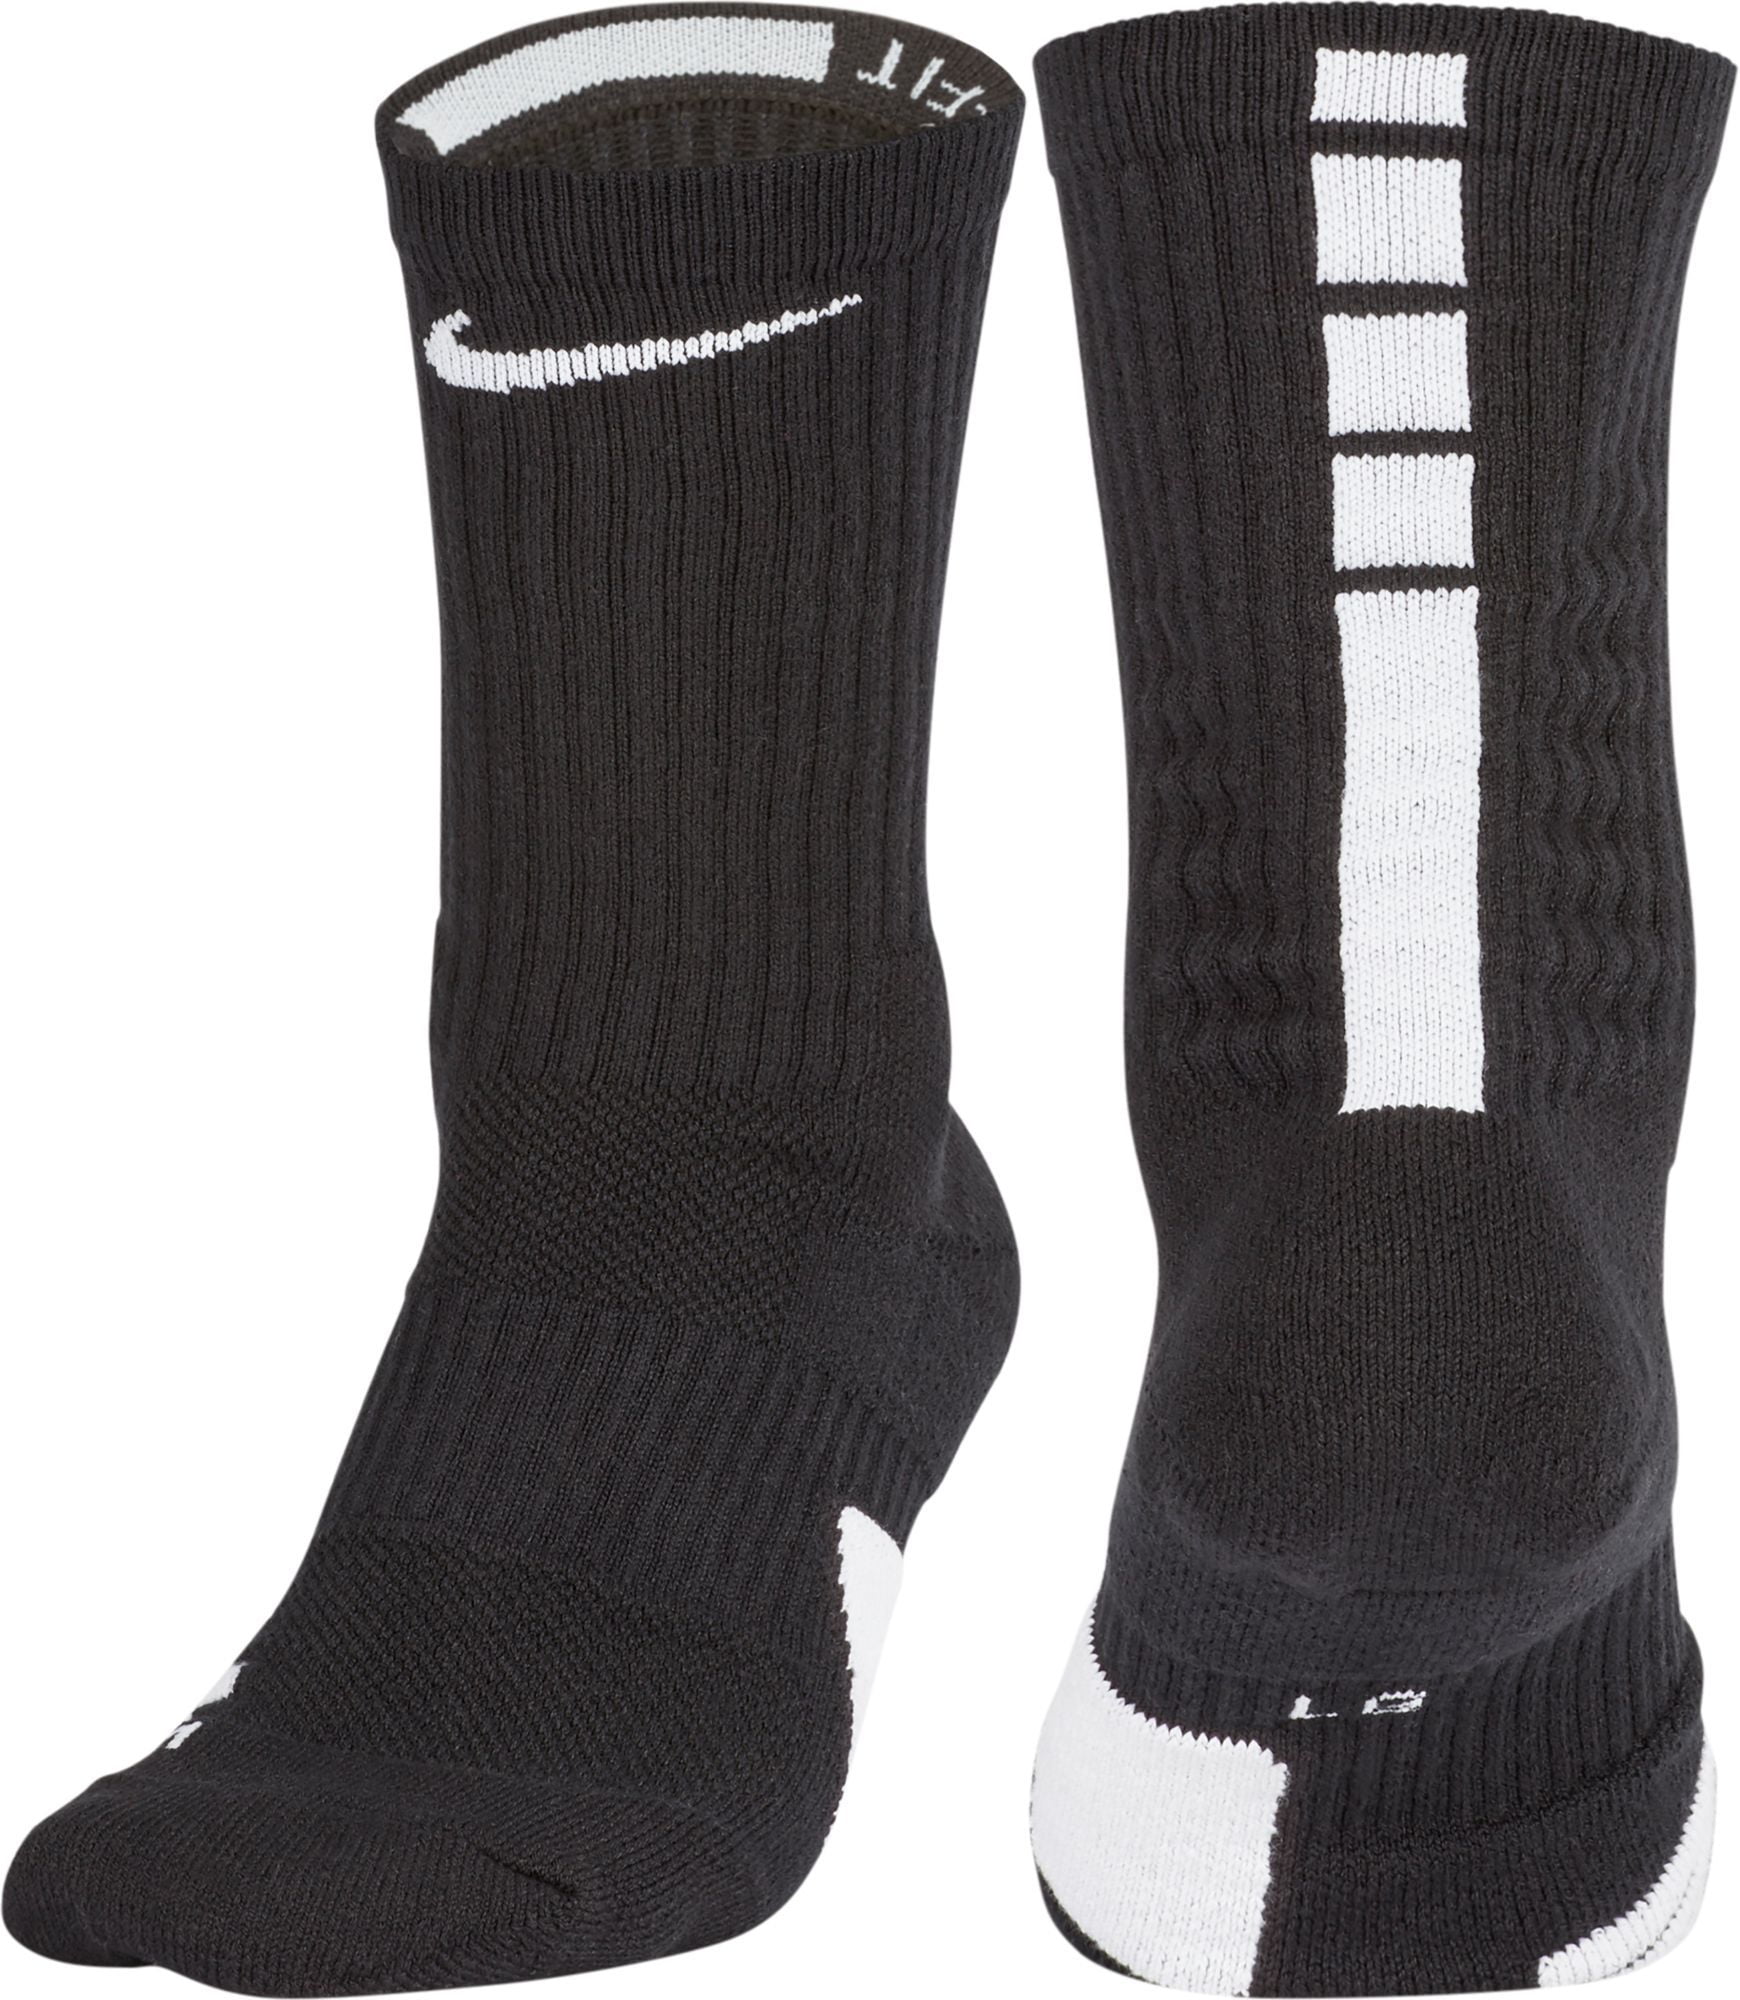 nike elite socks black and white